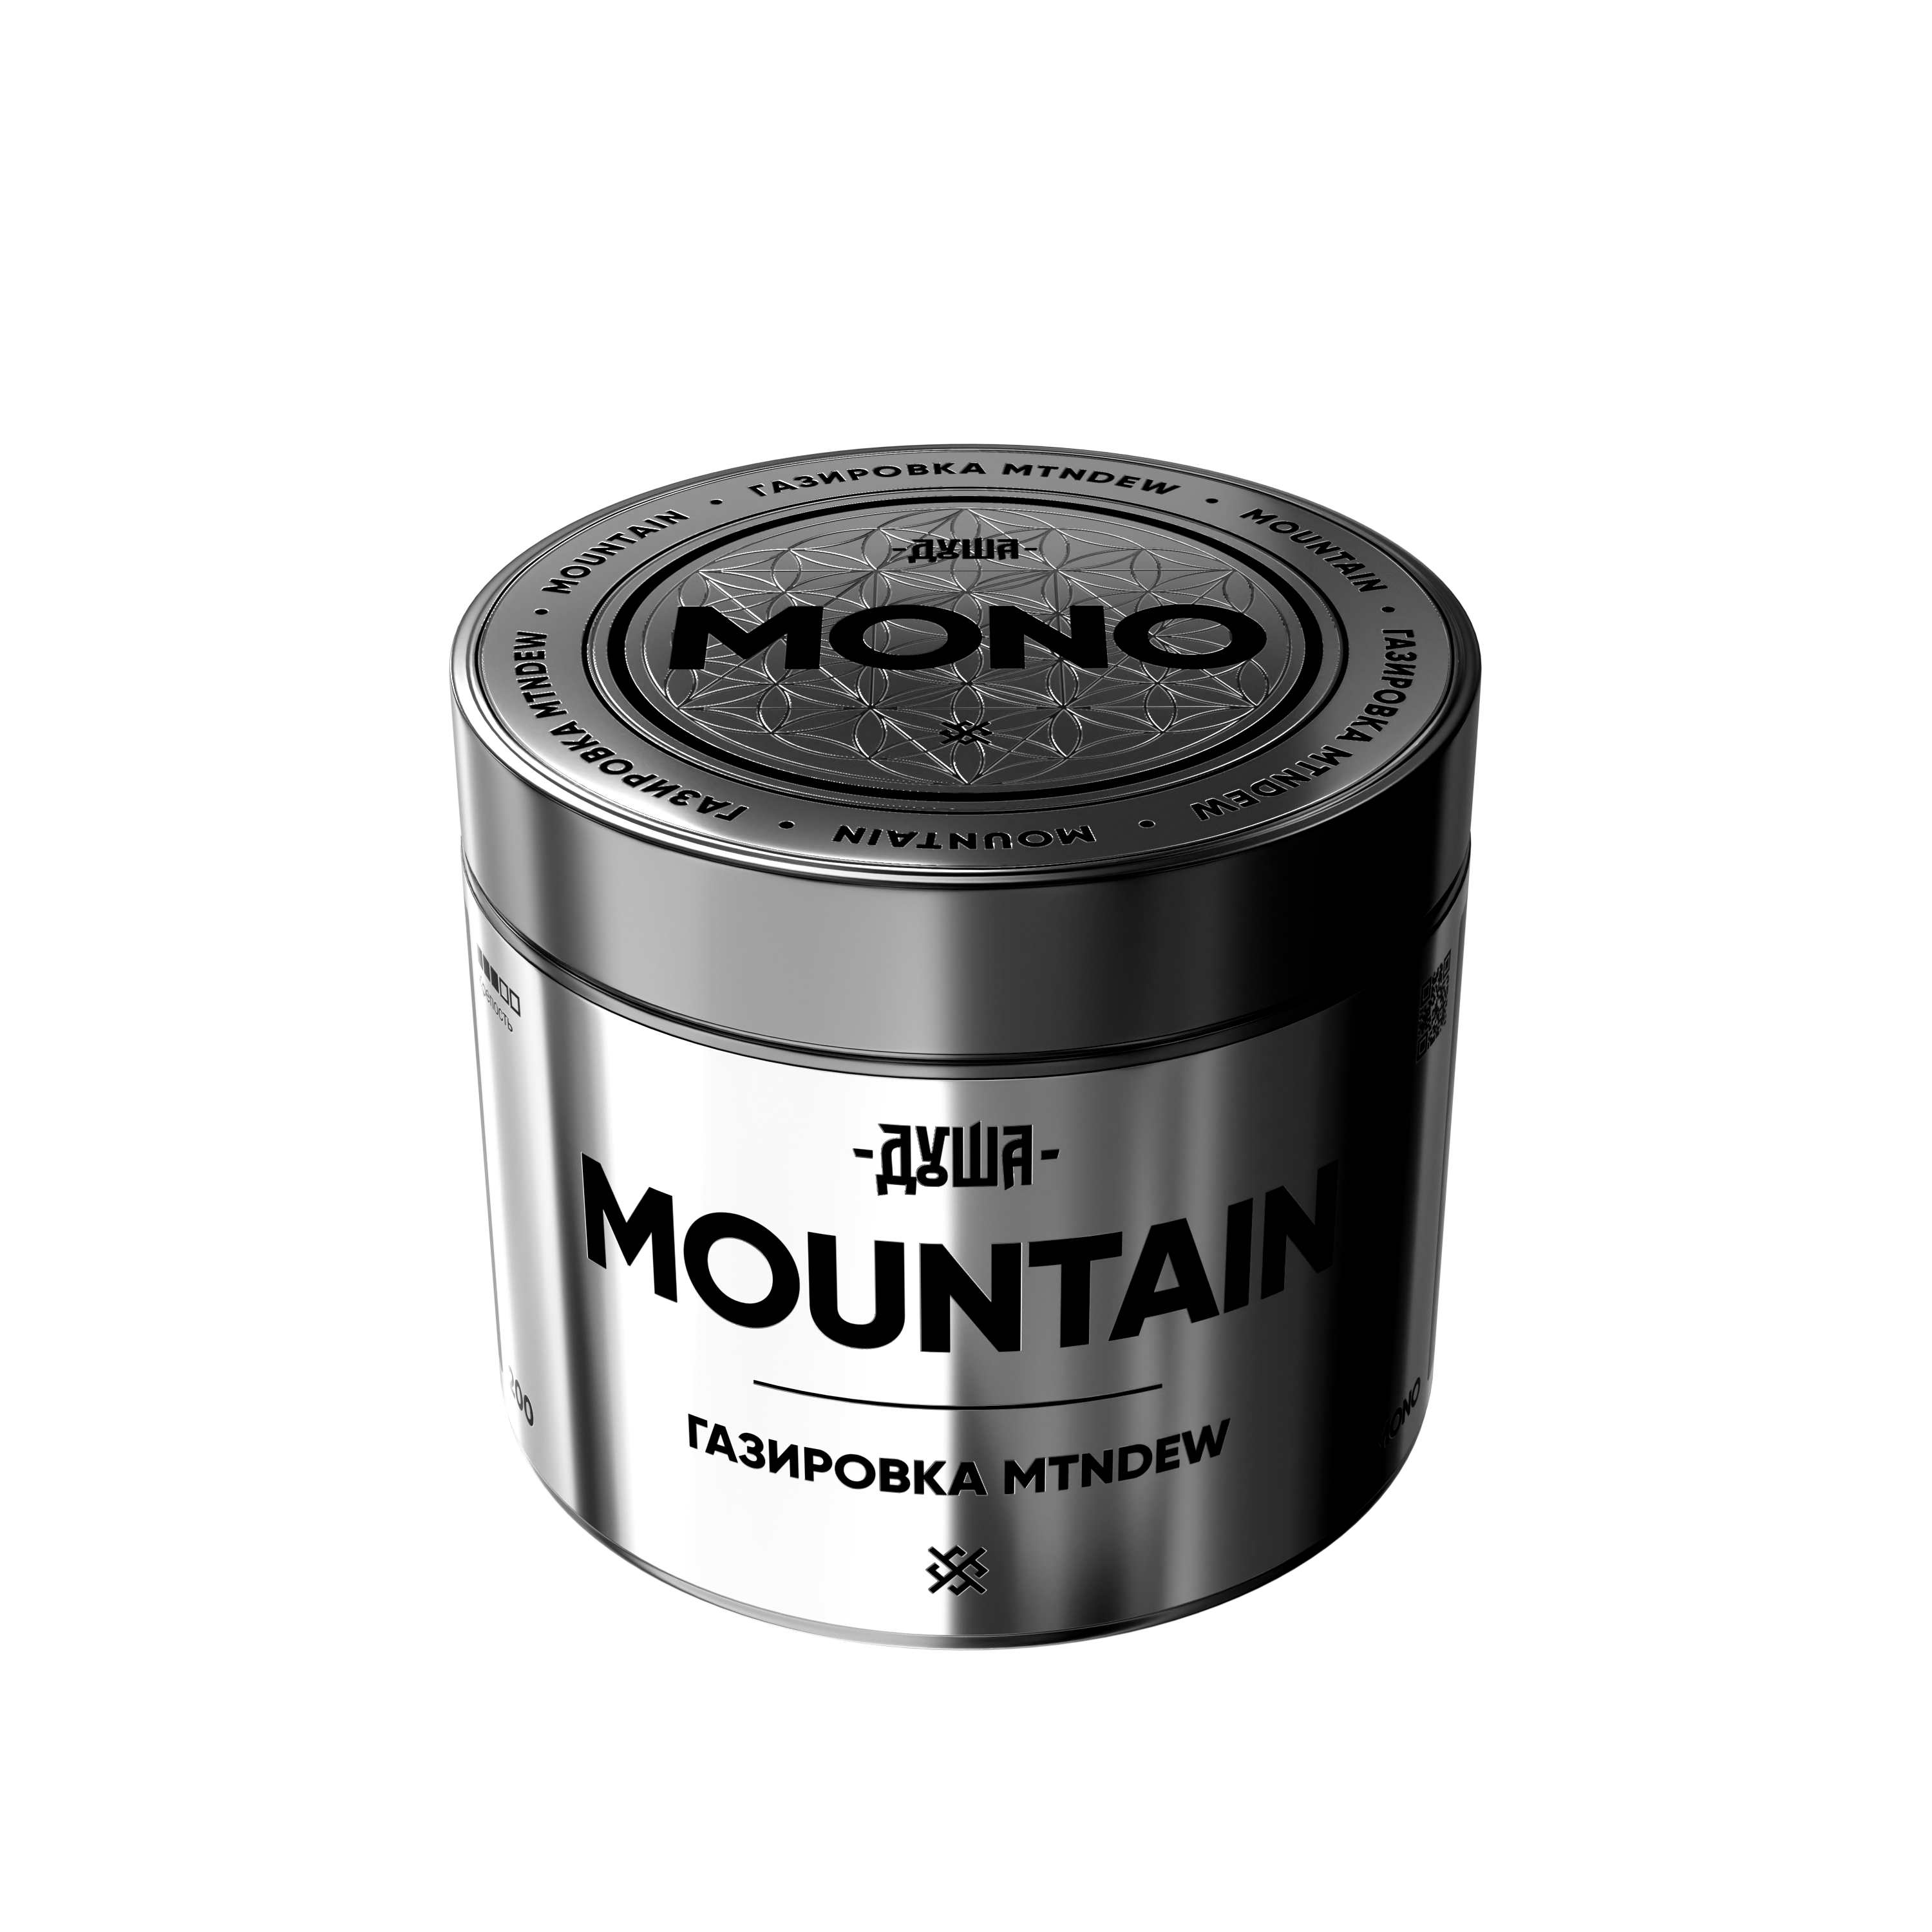 Табак для кальяна - Душа Mono - MOUNTAIN - ( c ароматом Газировка MTNDEW ) - 200 г